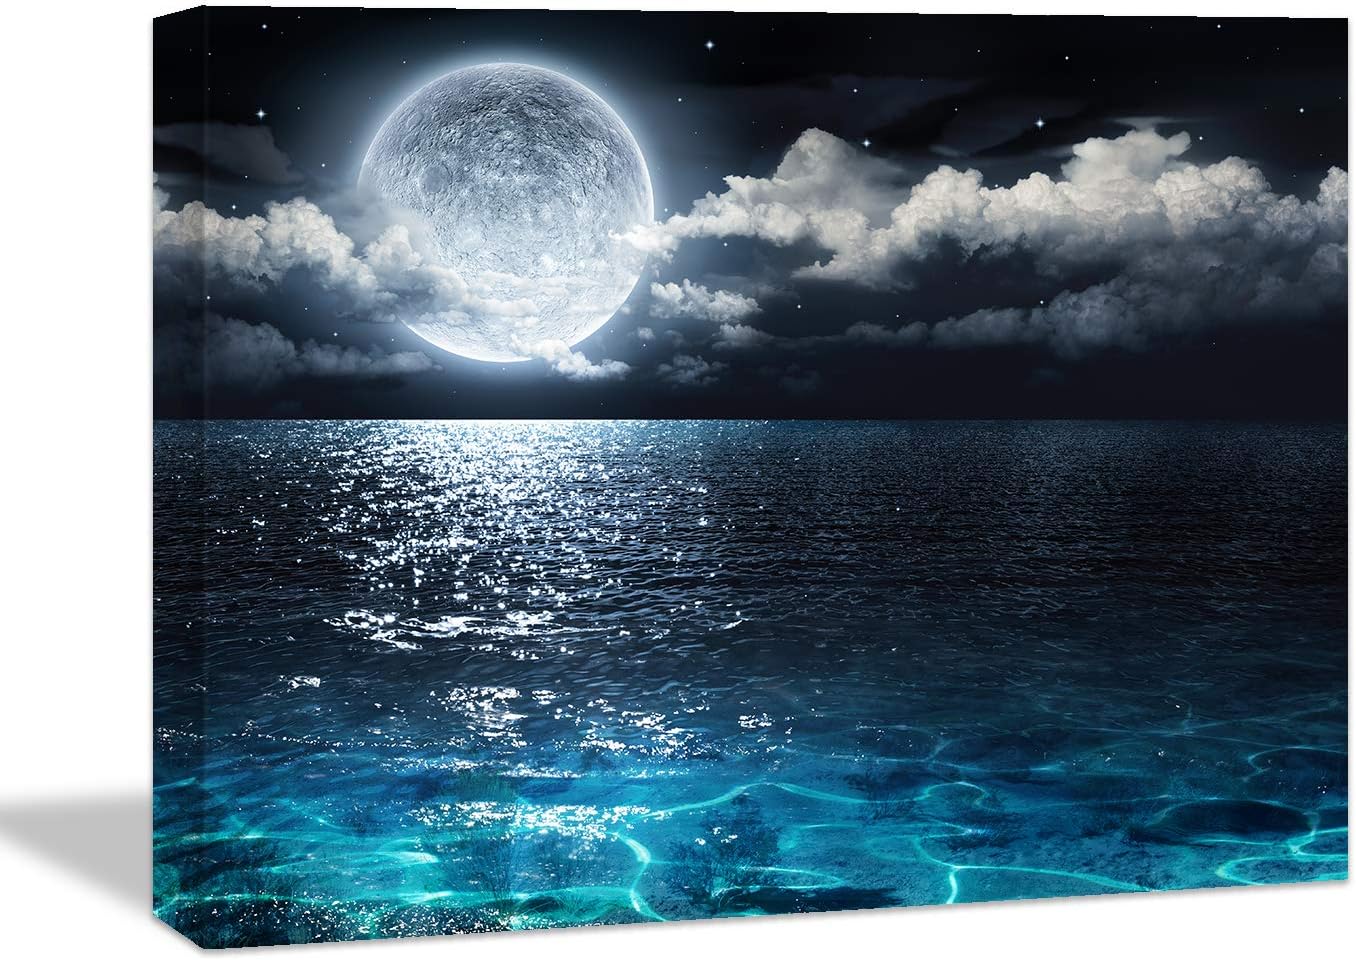 Brusheslife Ocean Theme Wall Art - Calmful Night Seascape, Moonlit Blue Sea Canvas, Ready to Hang Nature Decor